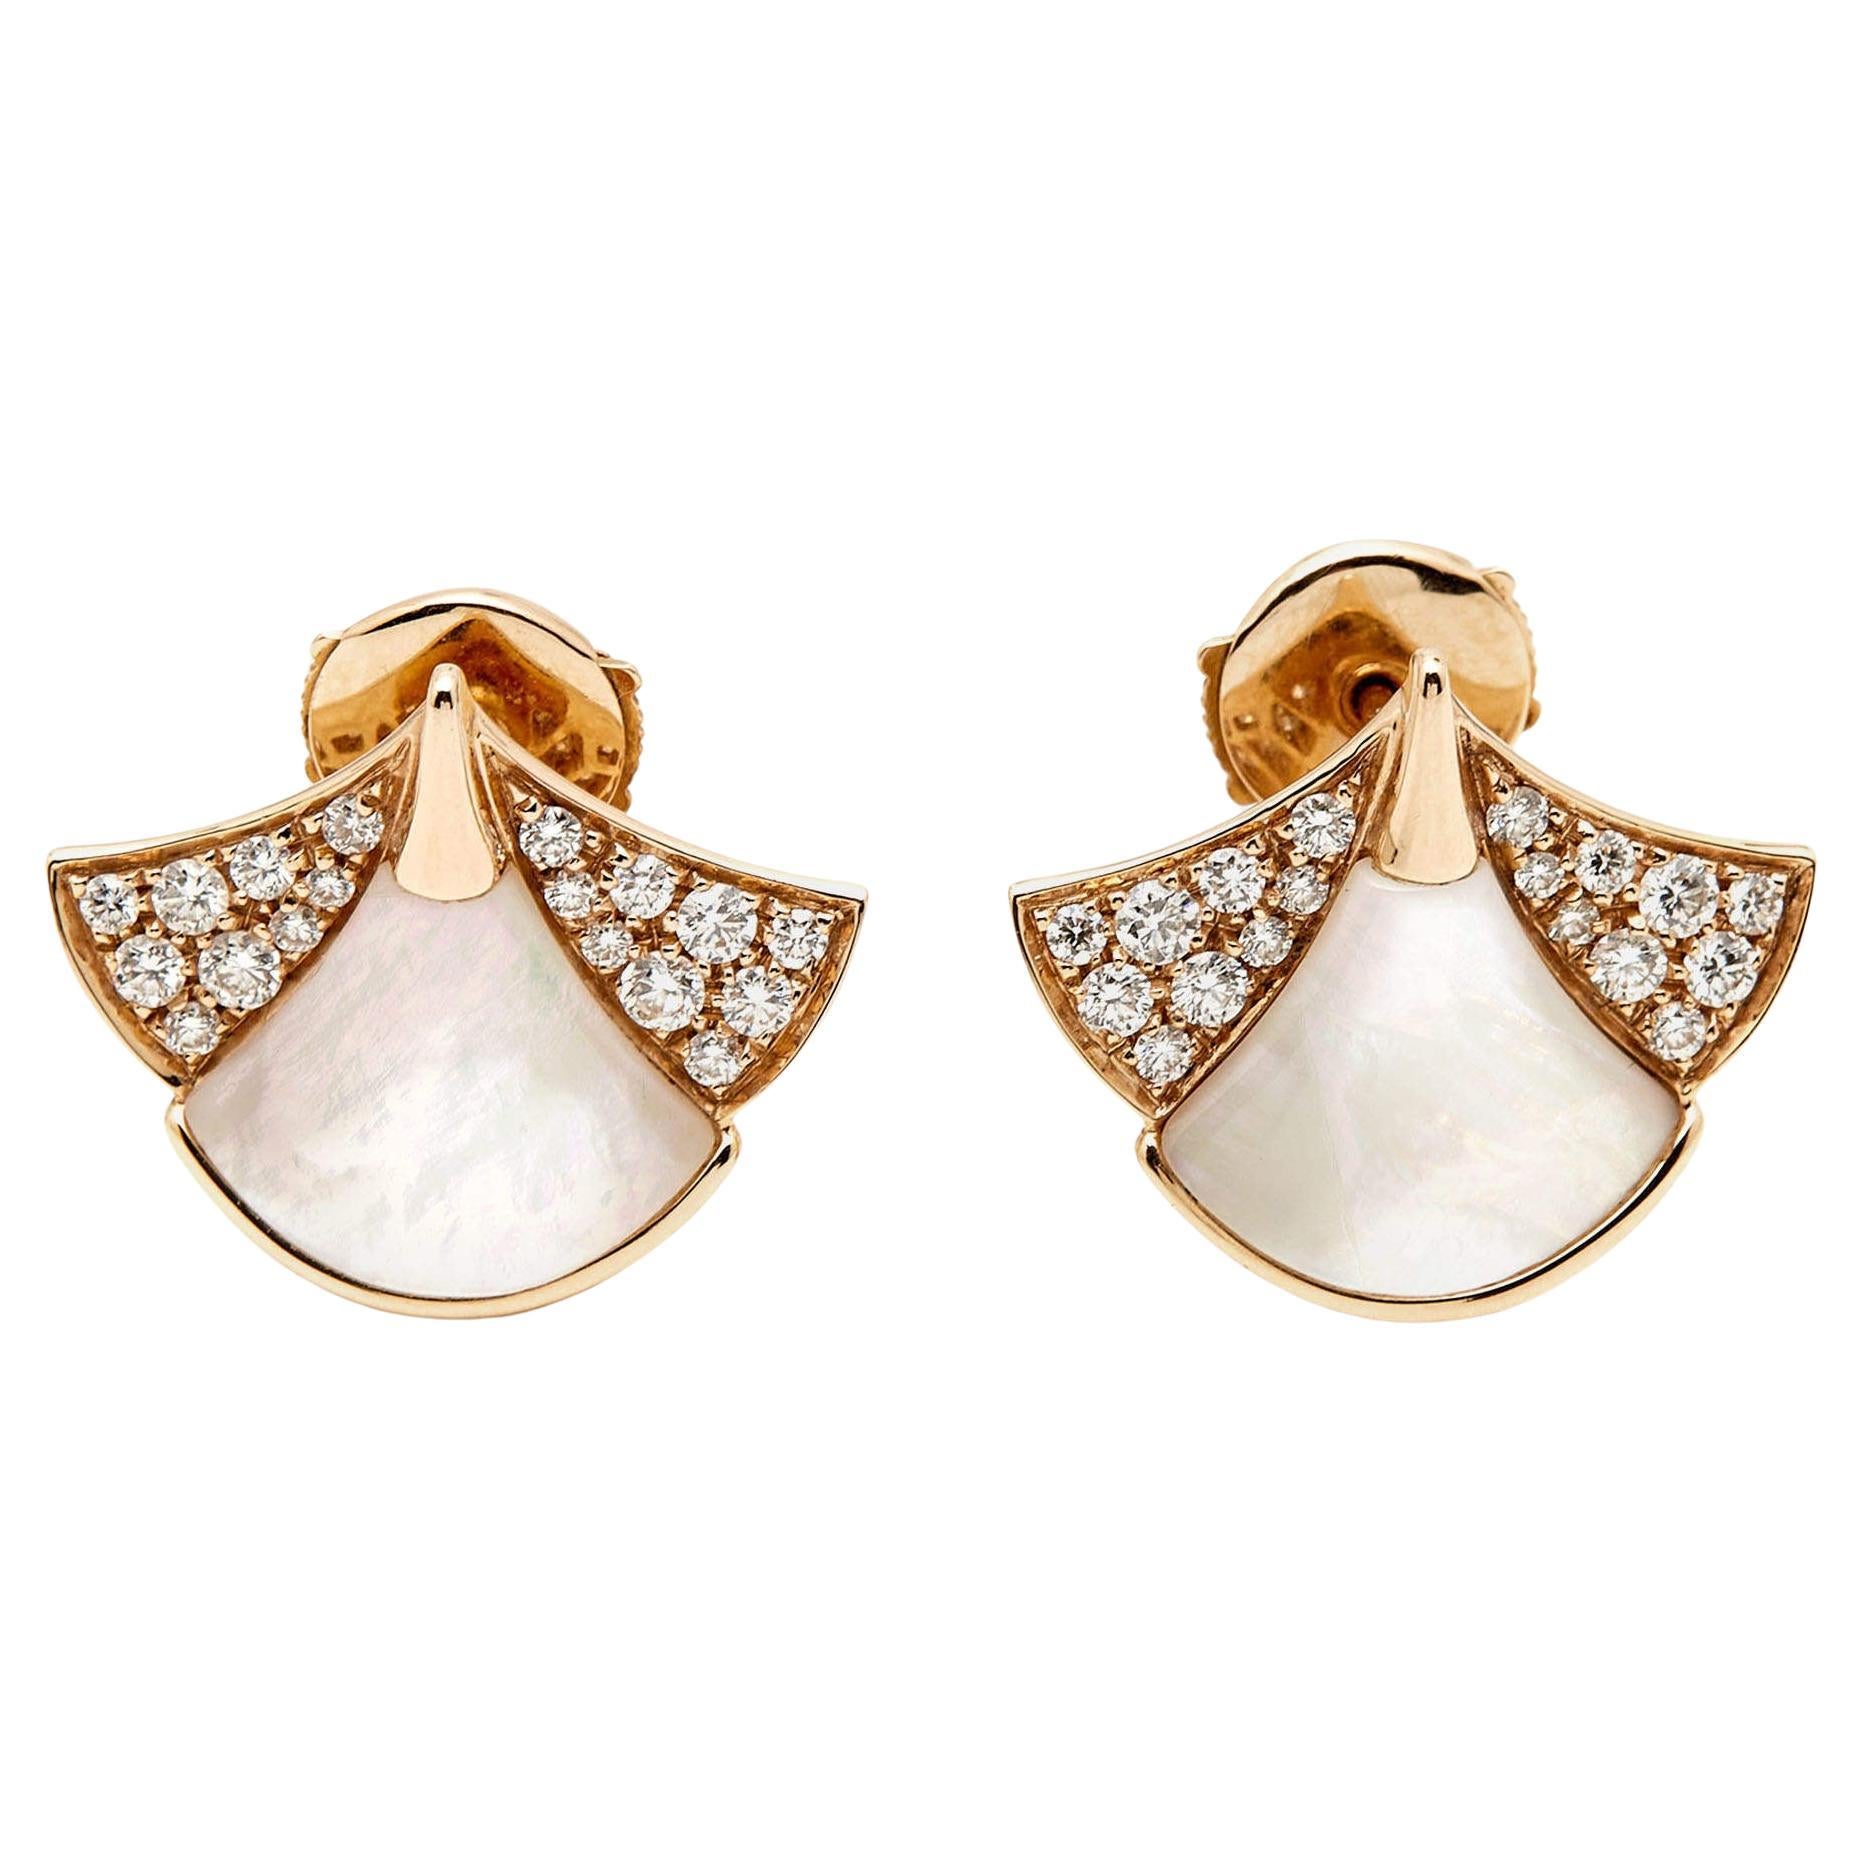 Discover more than 239 bvlgari rose gold earrings super hot